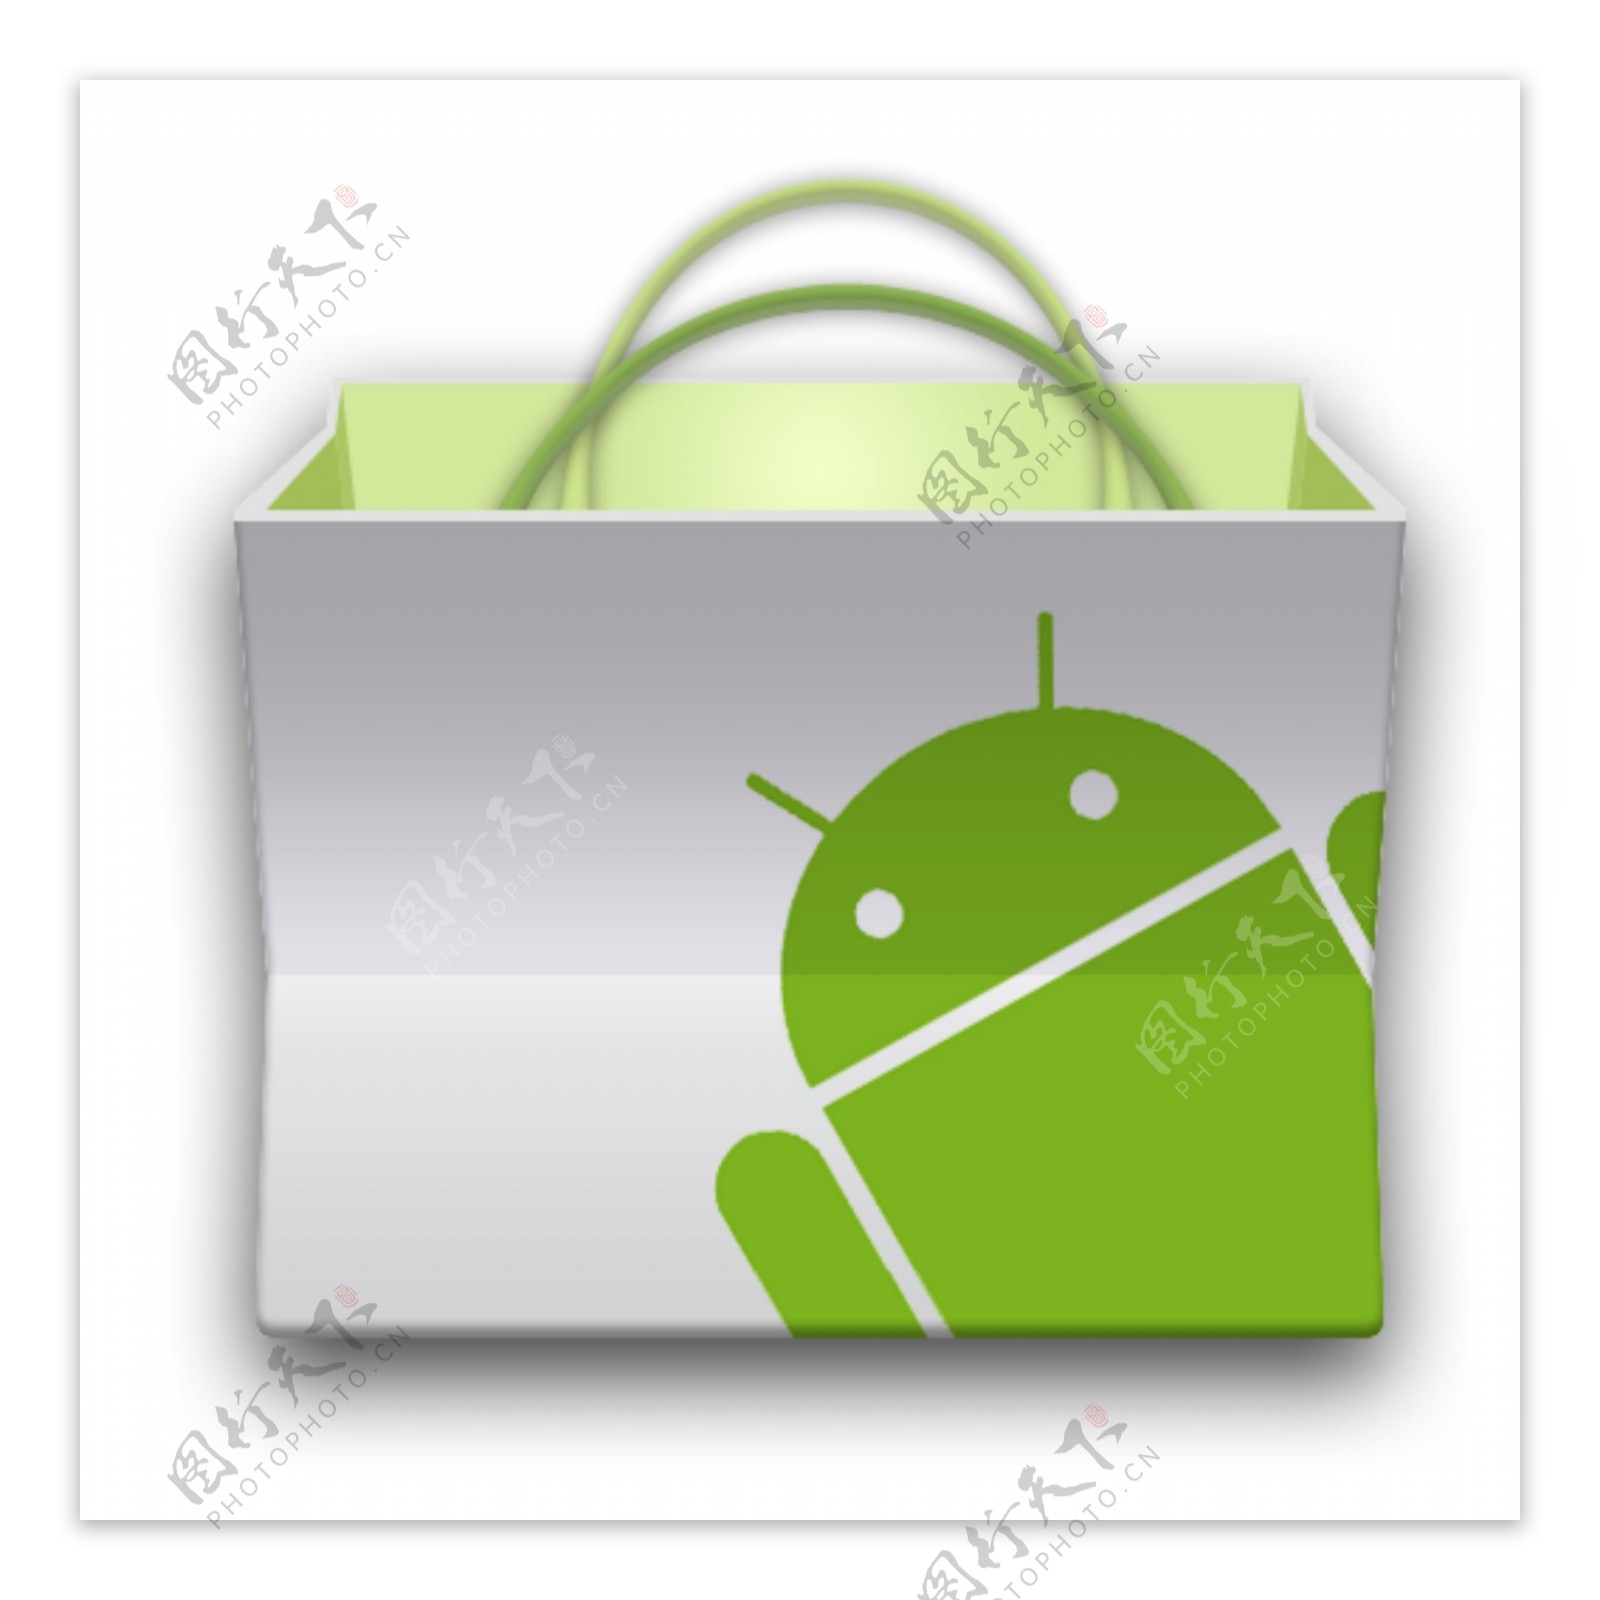 新的Android市场袋图标psd